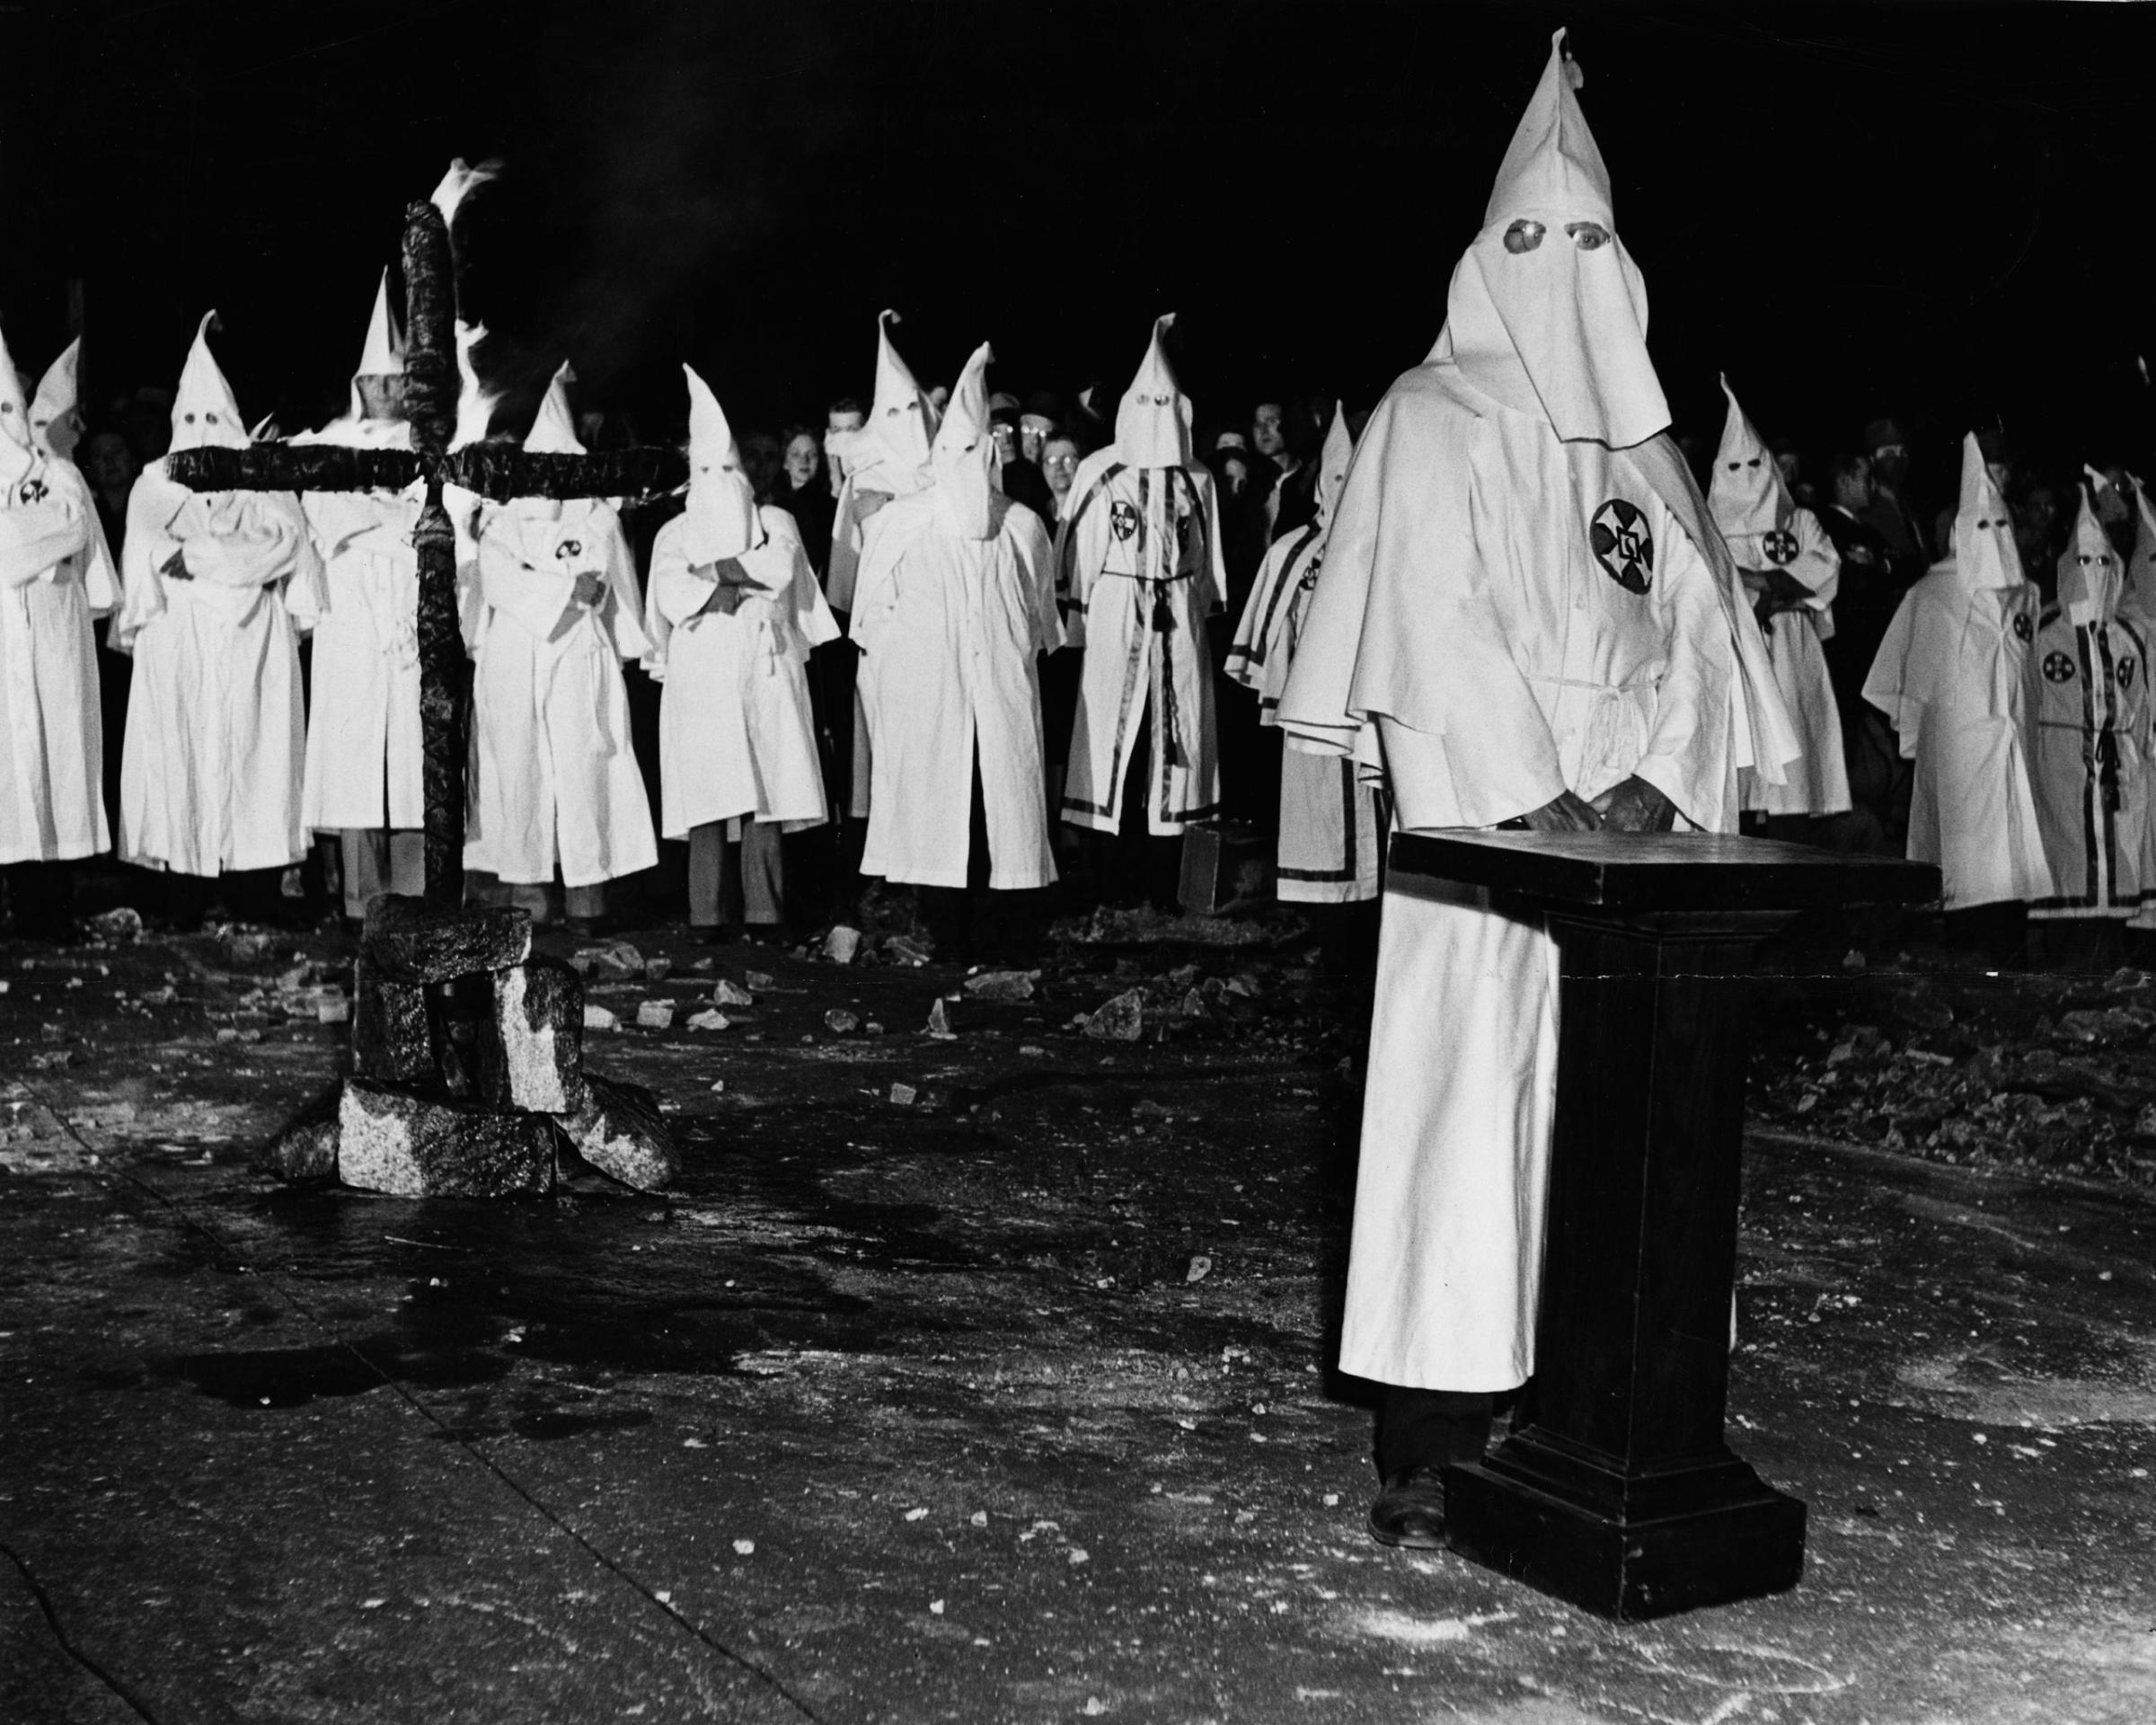 The scene at a Ku Klux Klan initiation ritual in Georgia, May 1946.